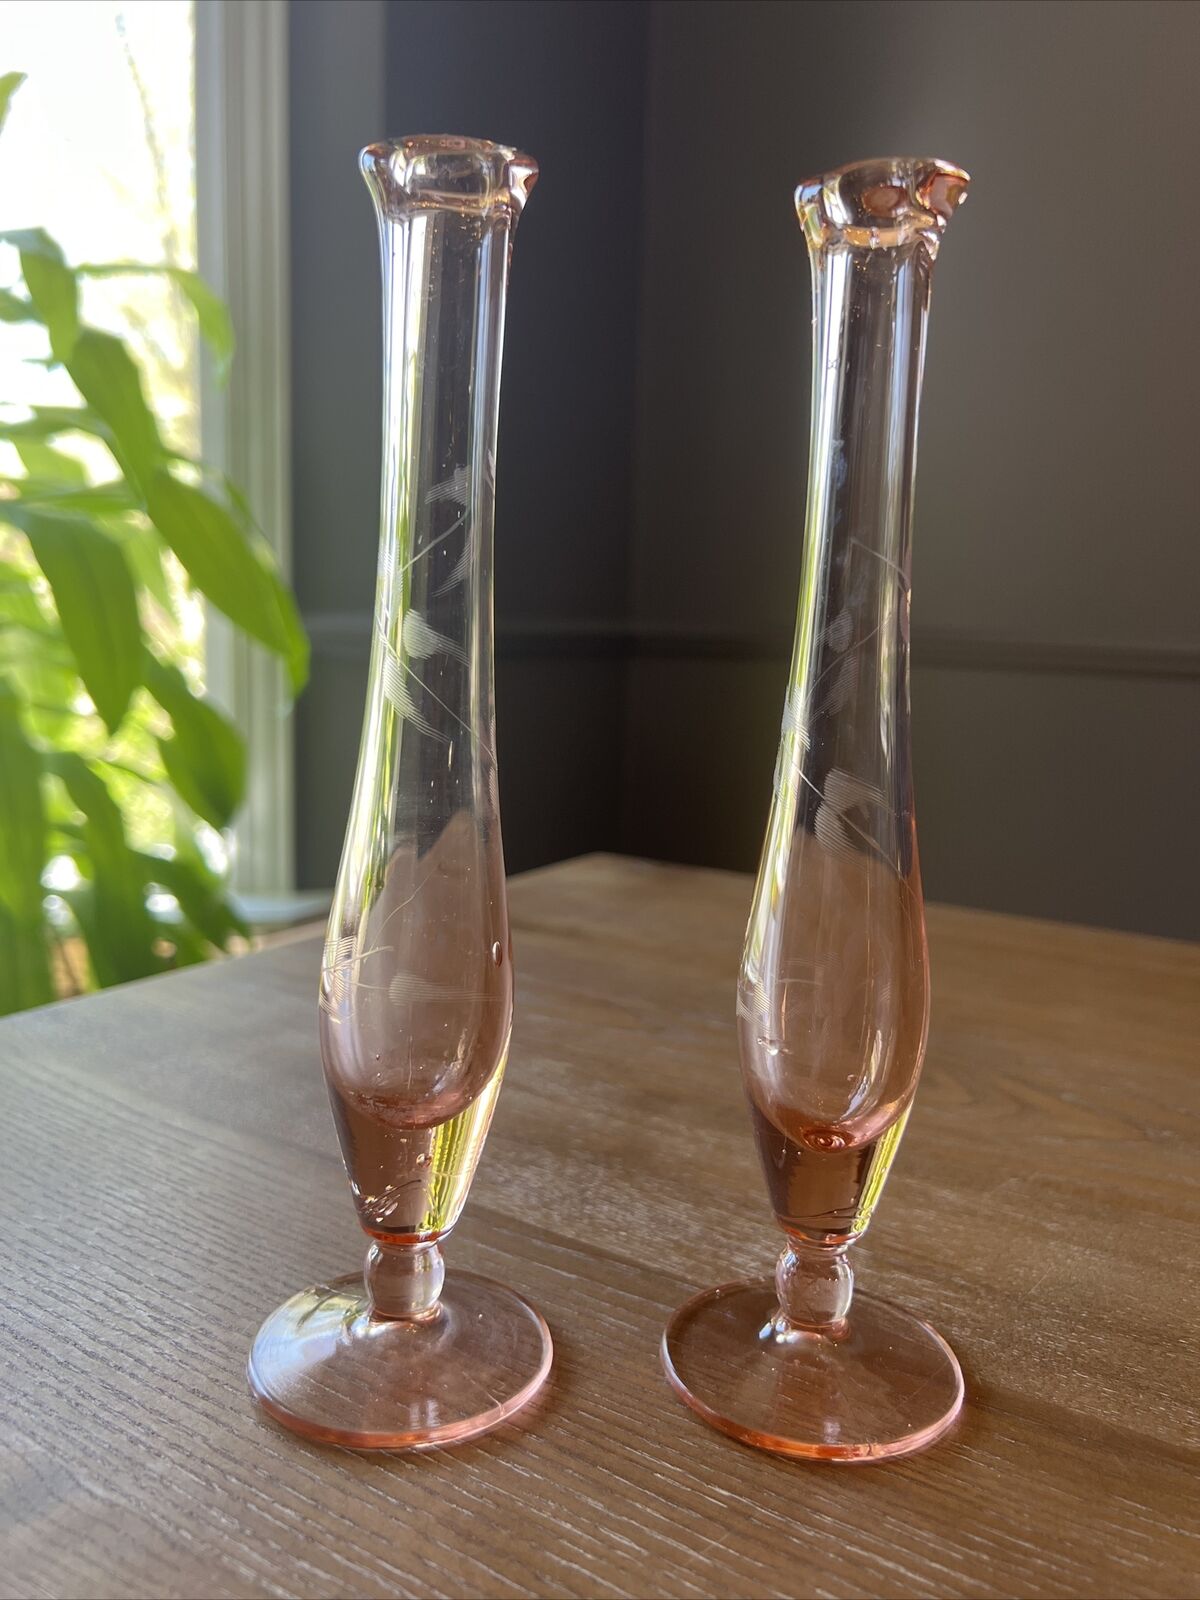 Pair of Vintage Pink 🌸 Depression Glass Etched Swung Bud Vases - Set of 2 🌸